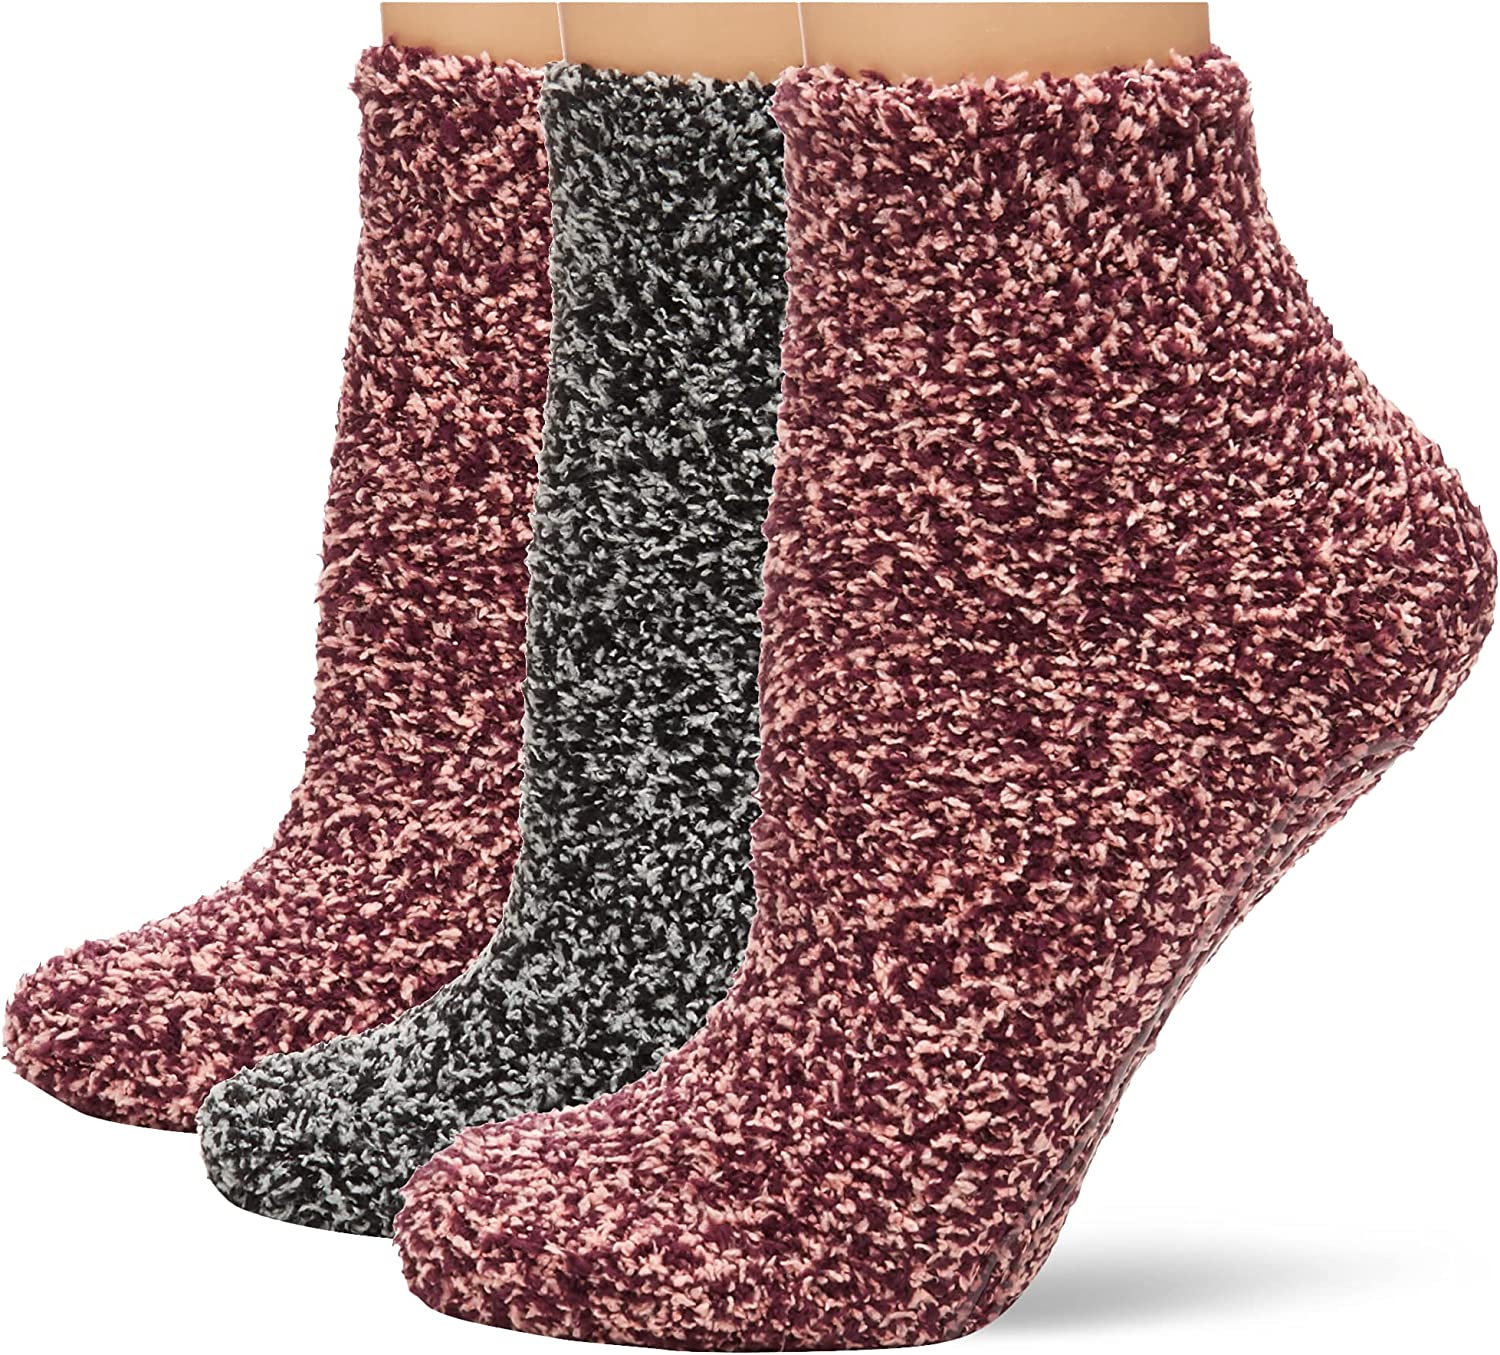 Dr. Scholl’s Scented Premium Yarn Slipper Socks, 3-Pack